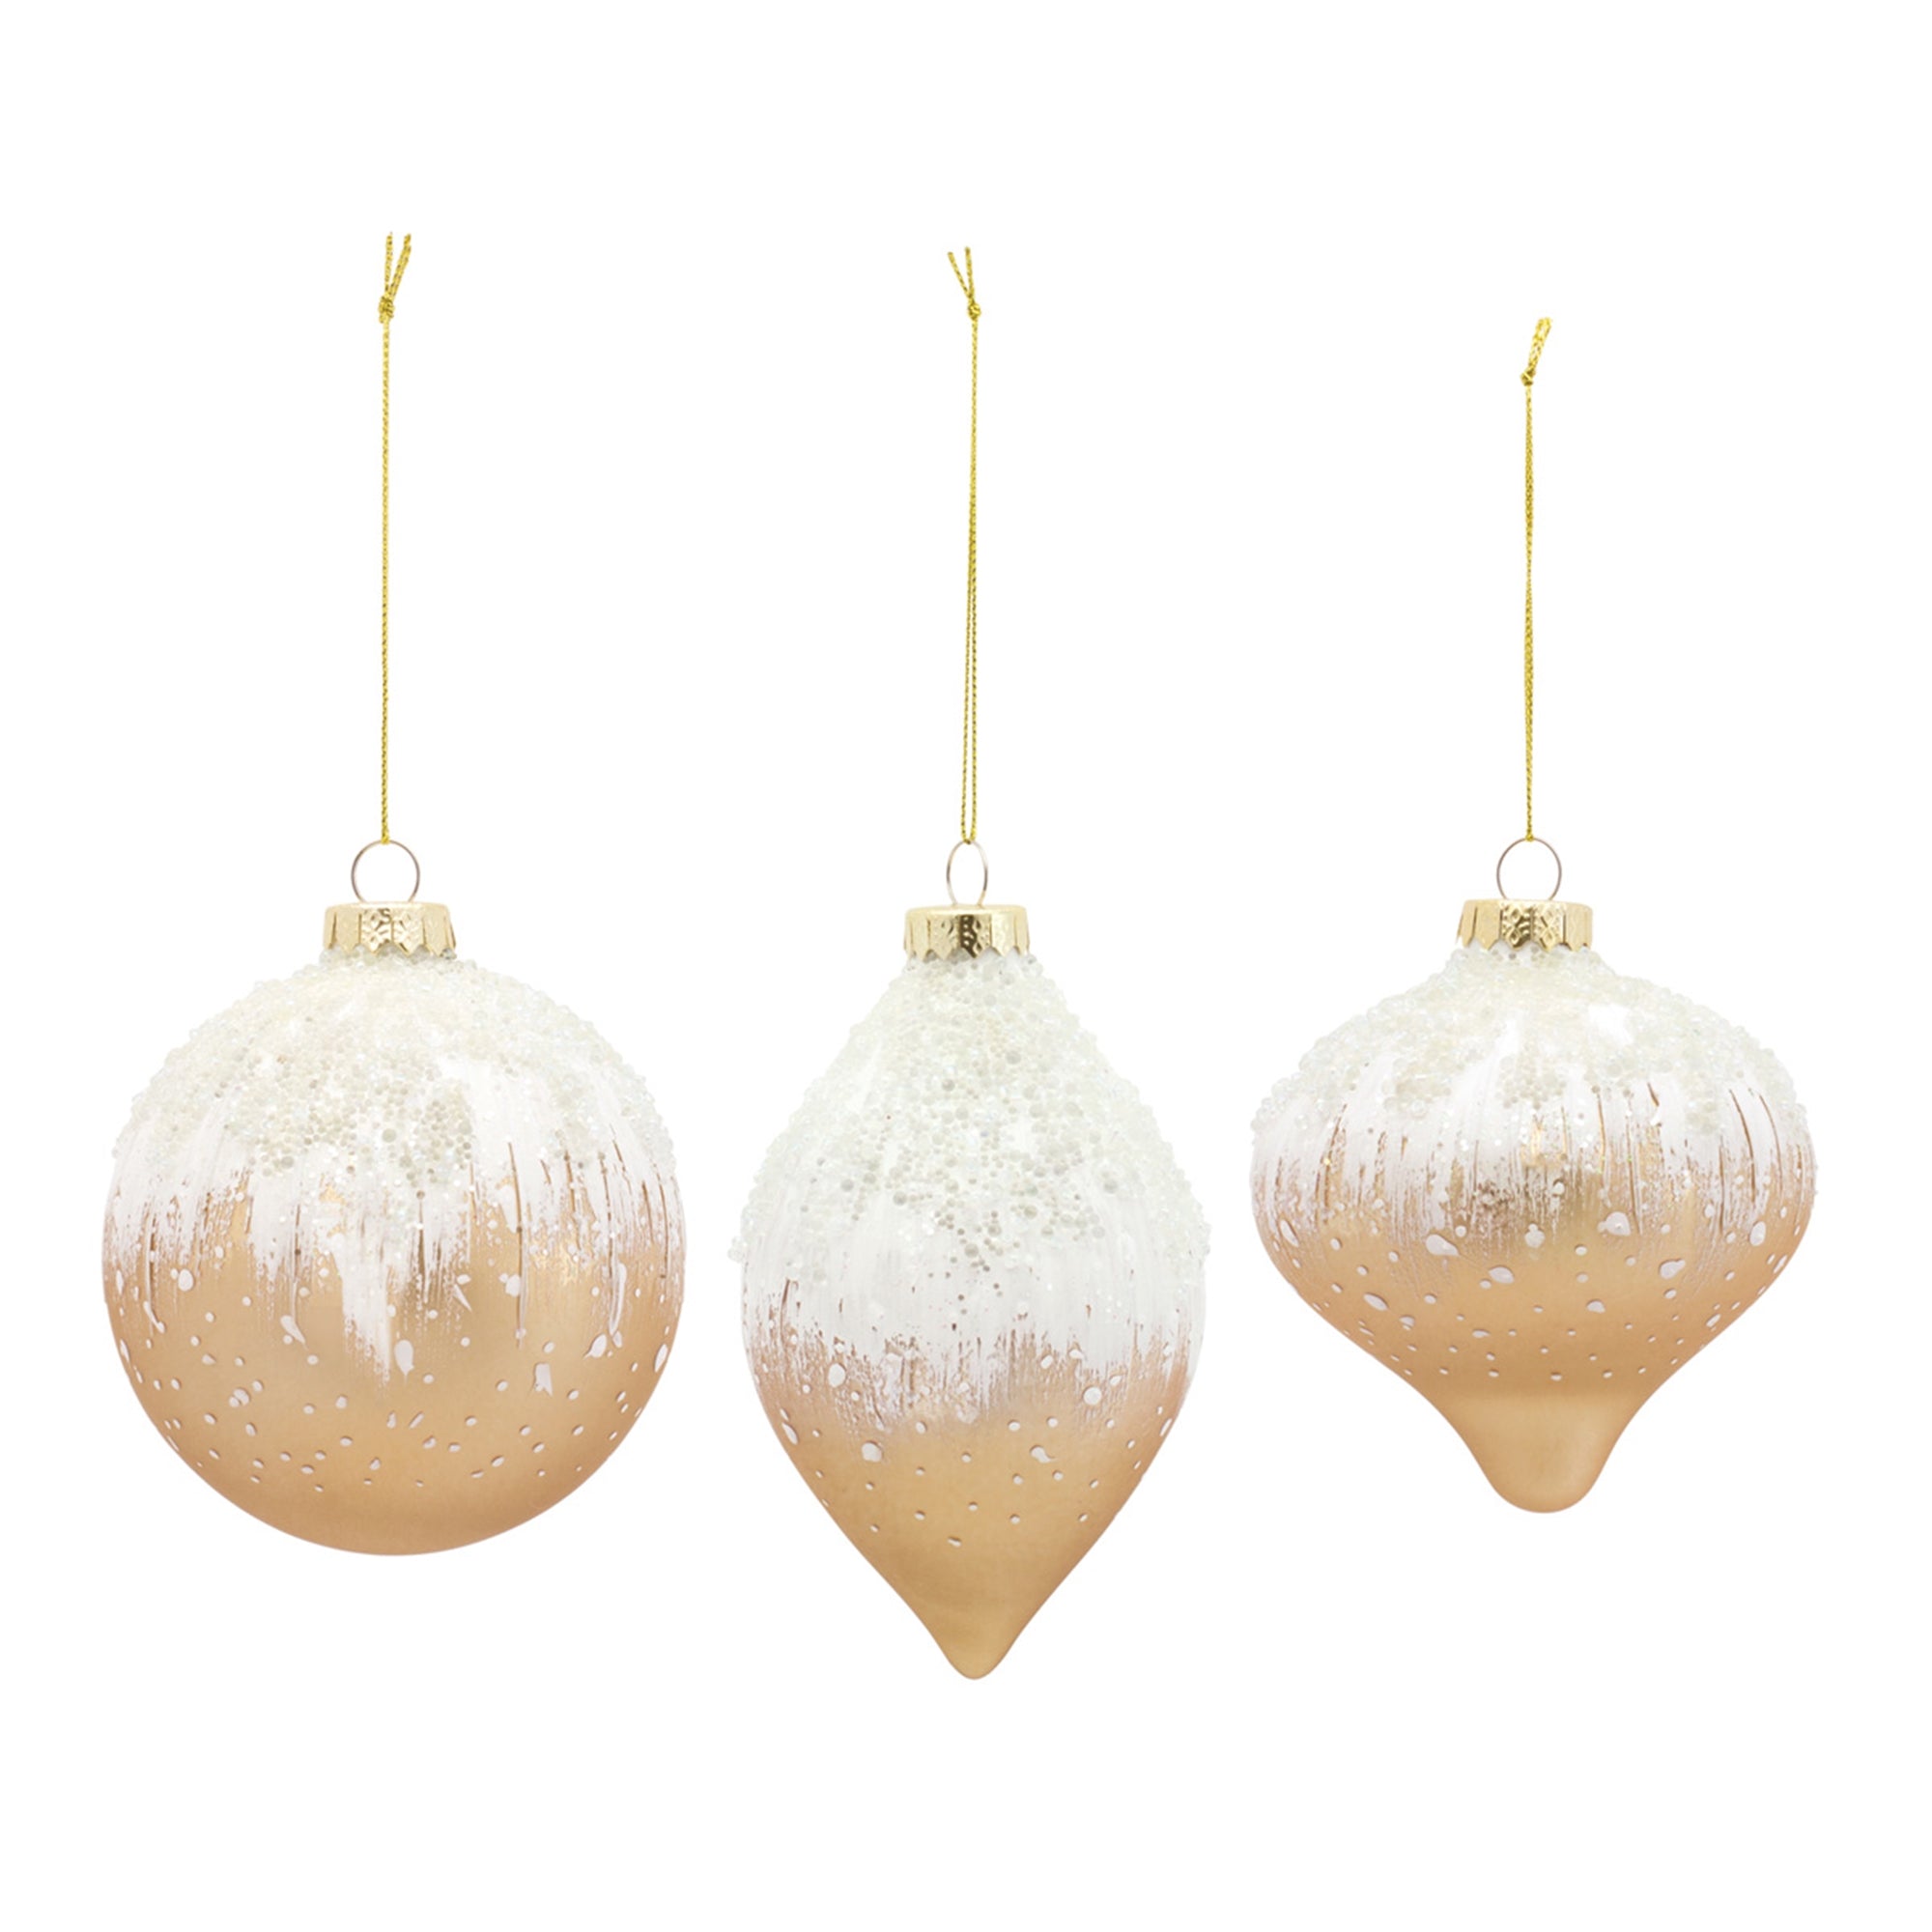 Gold w/ Snow Accent Ornaments (S/6)